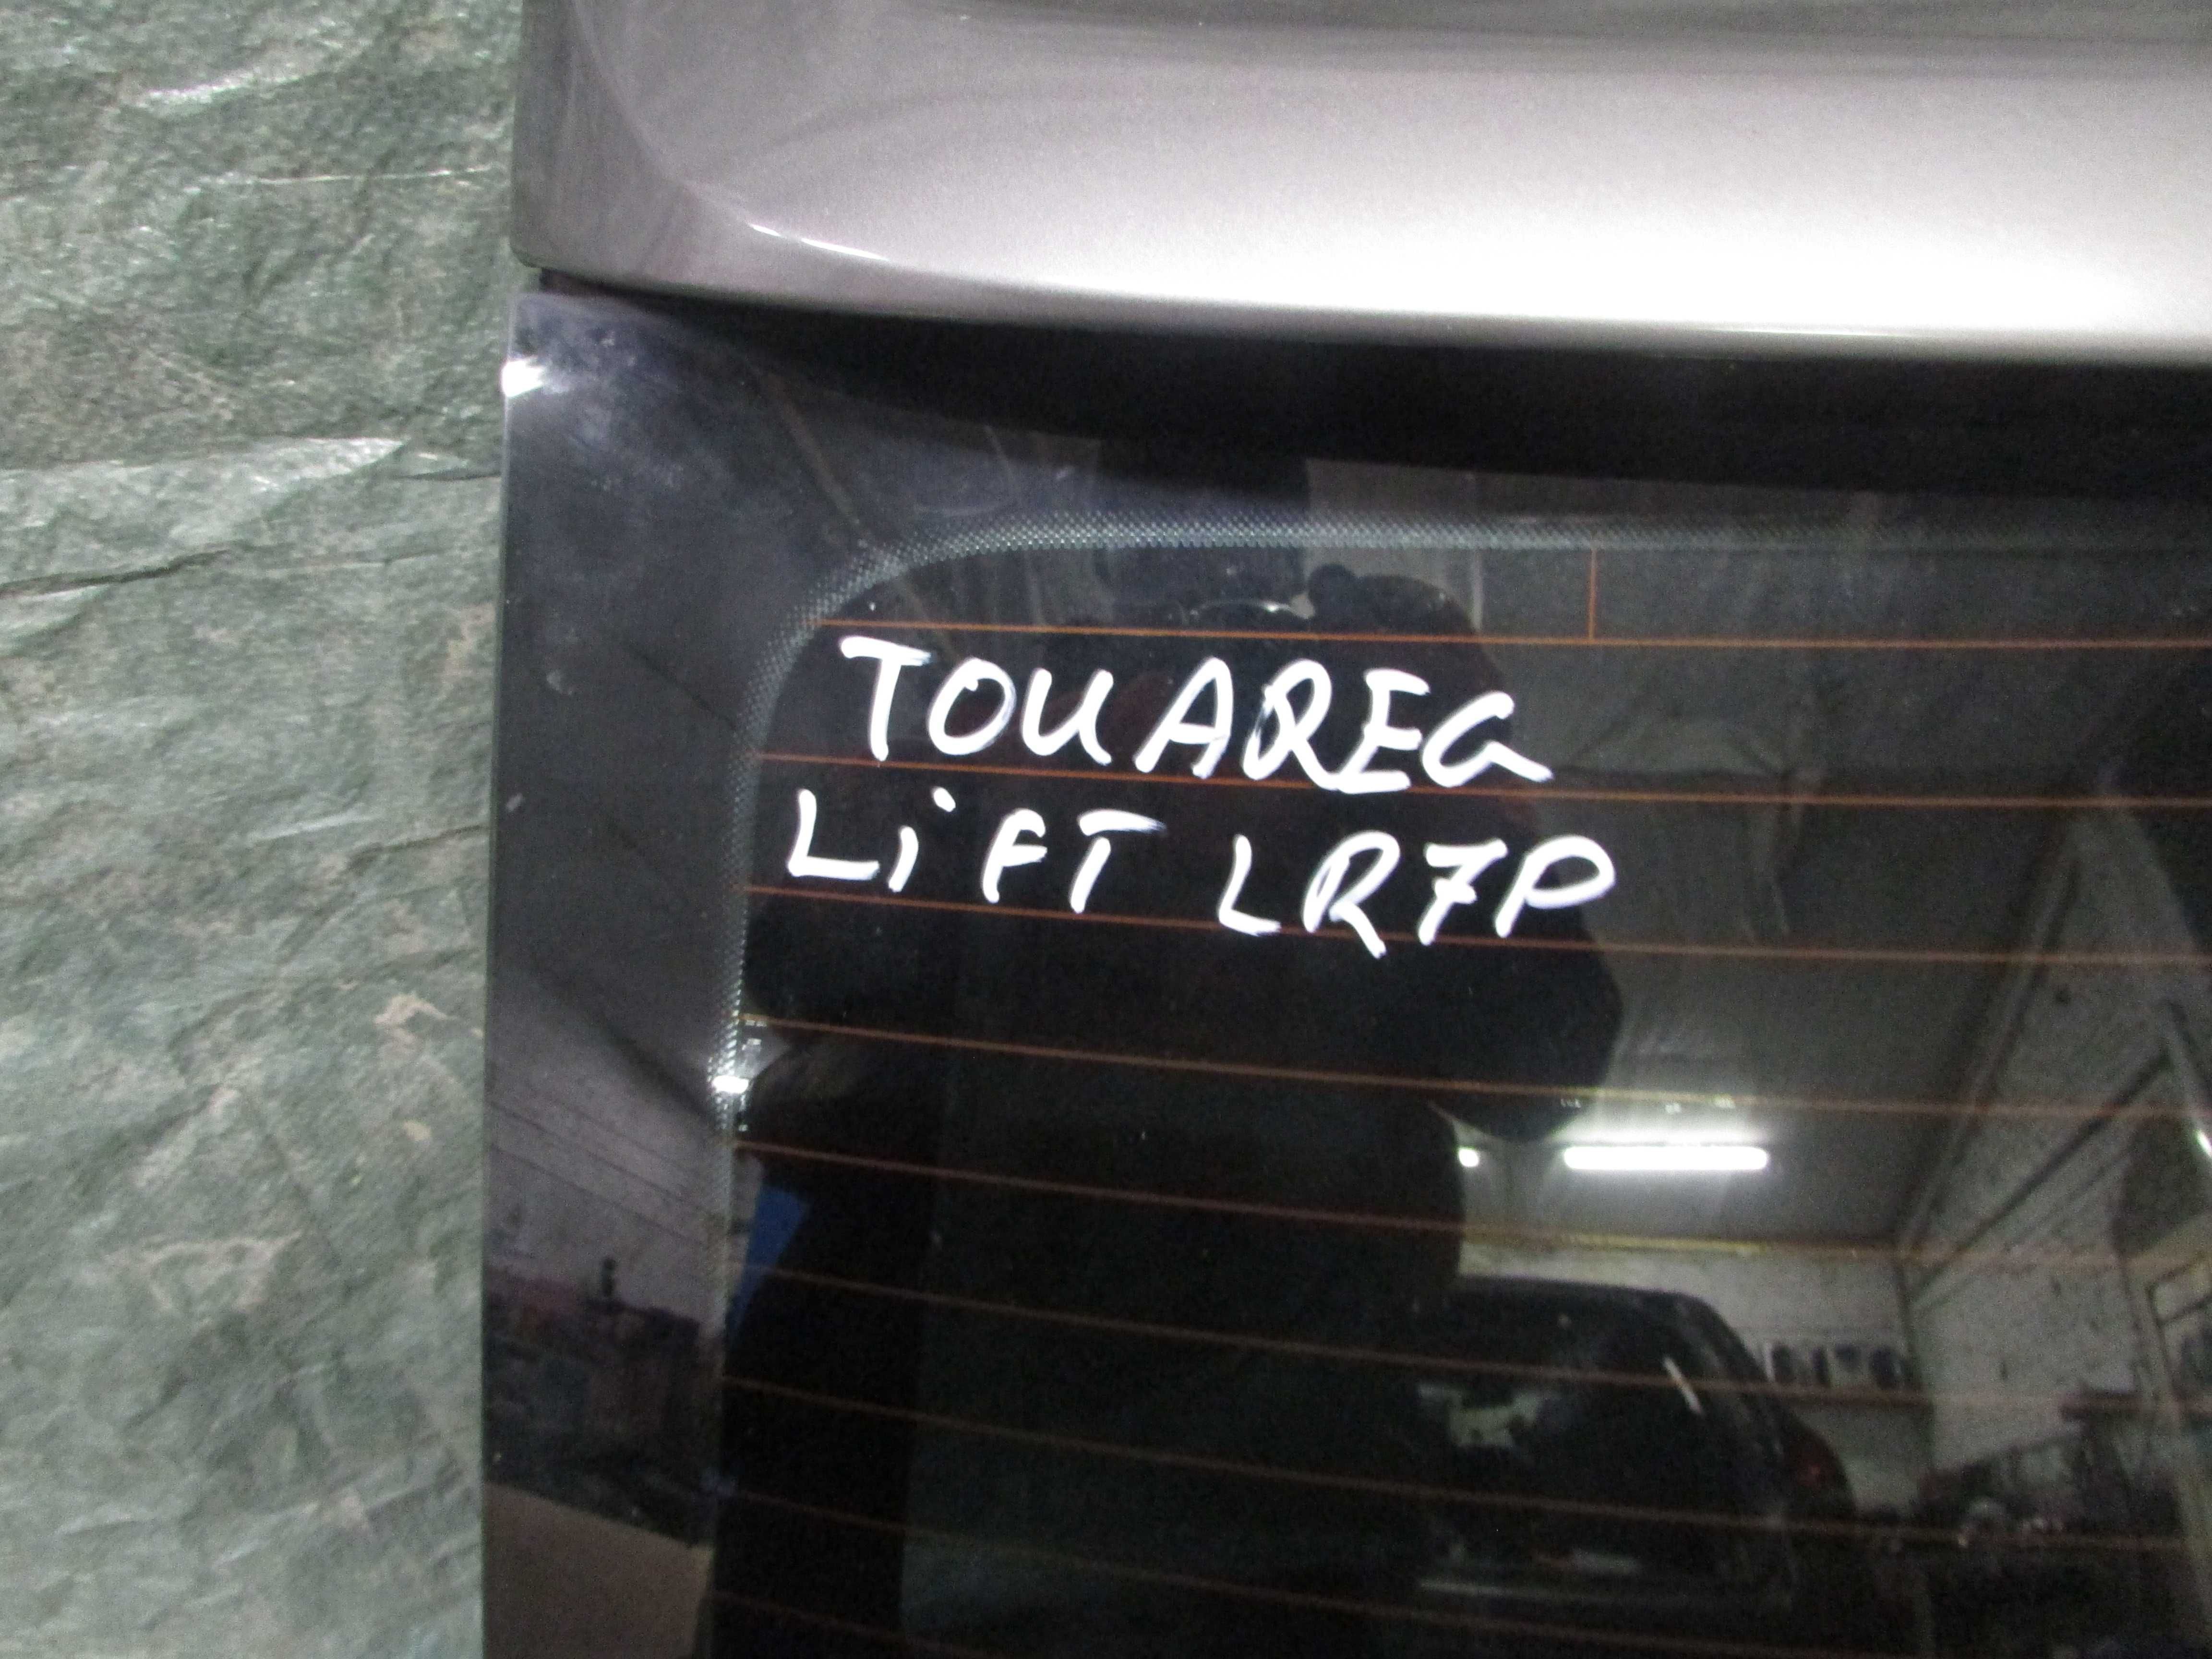 Klapa Bagażnika Vw Touareg Lift LR7P